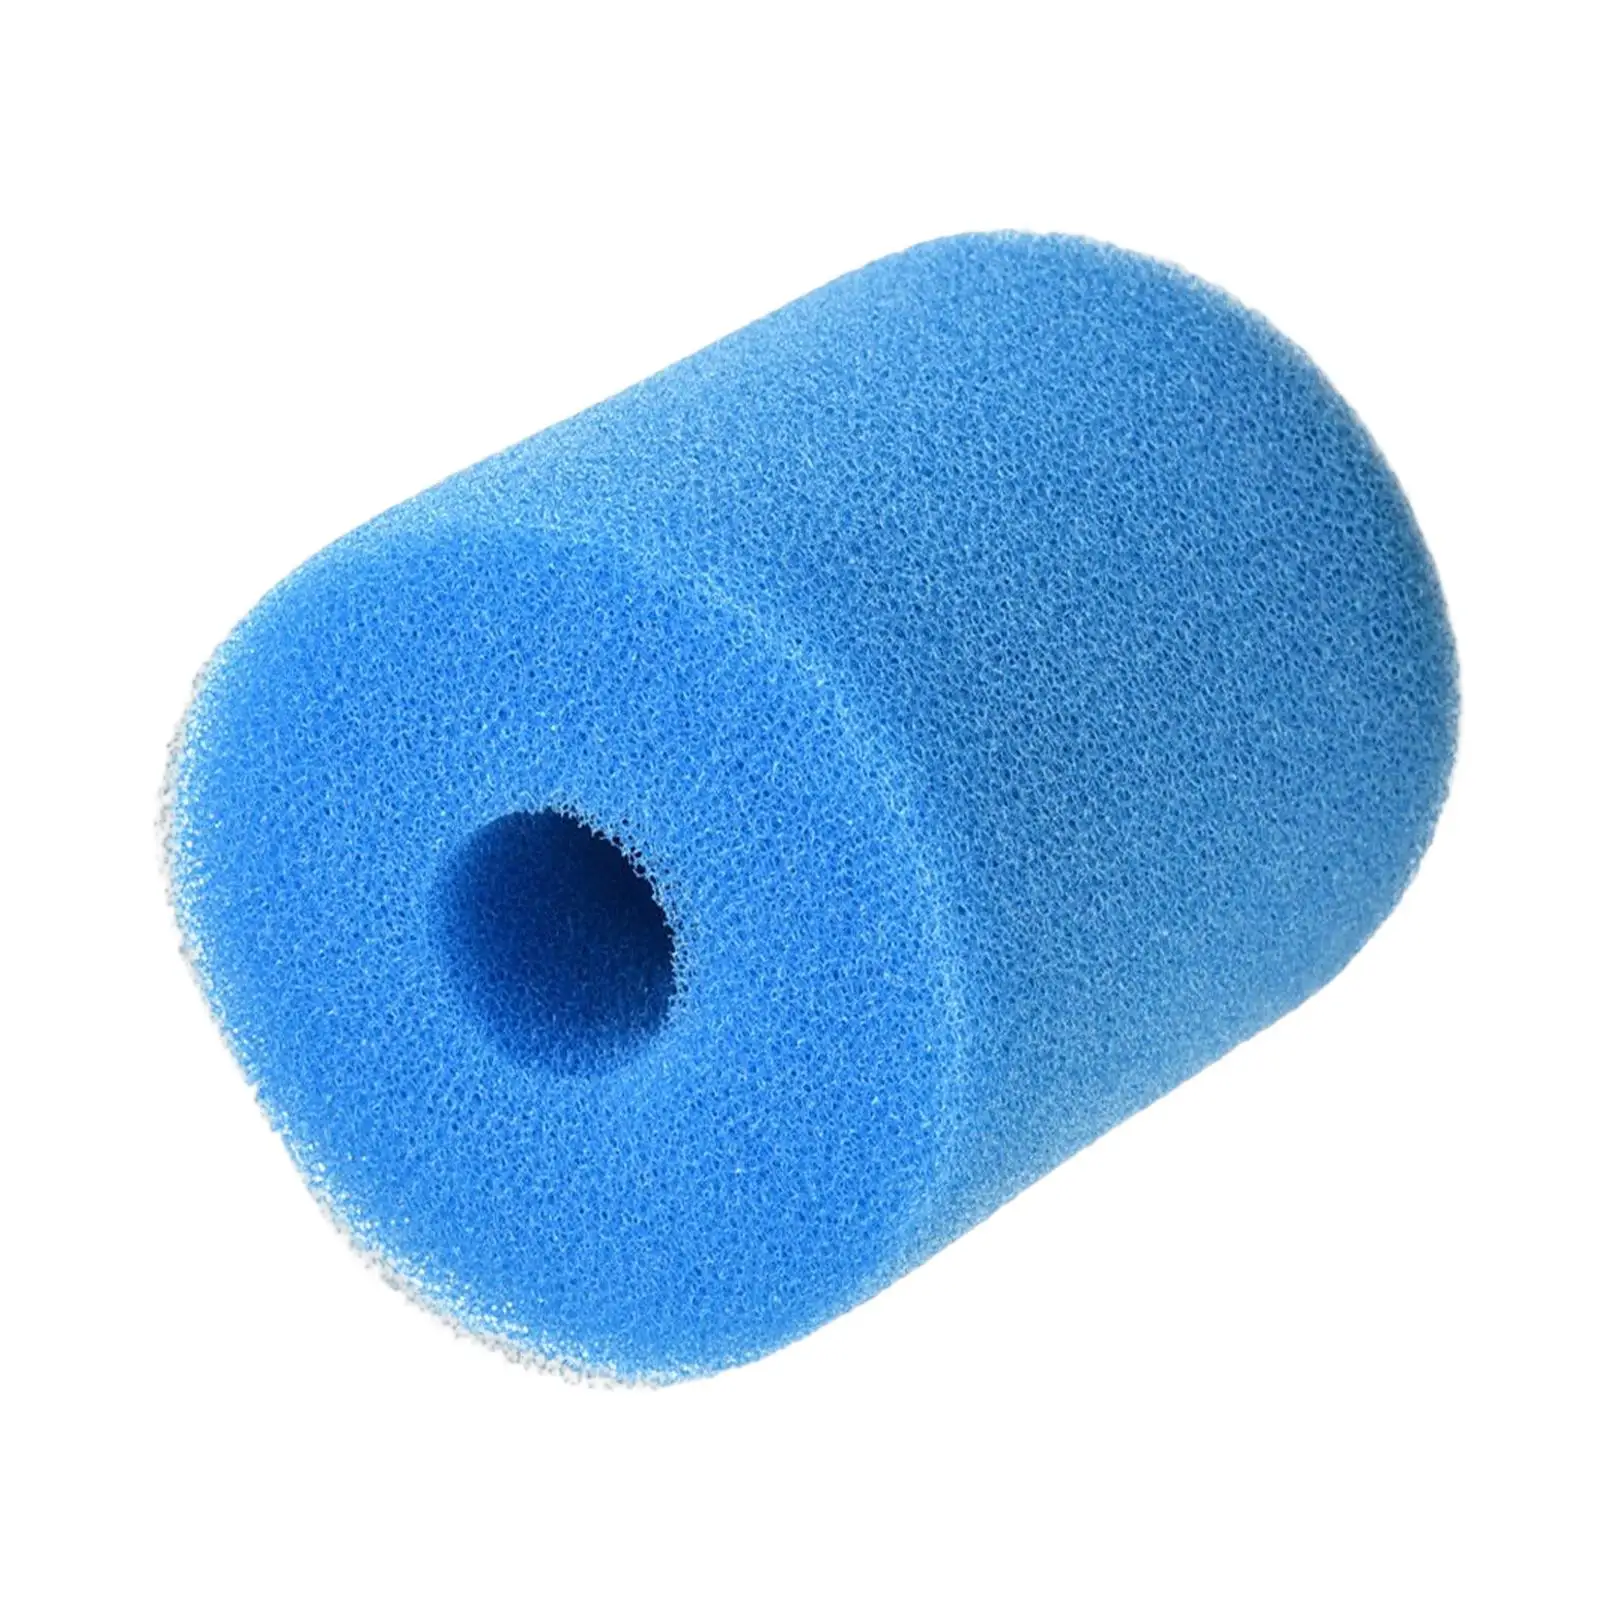 Filter Cartridge Washable Foam Cartridge Sponge for Type II Summer above Ground